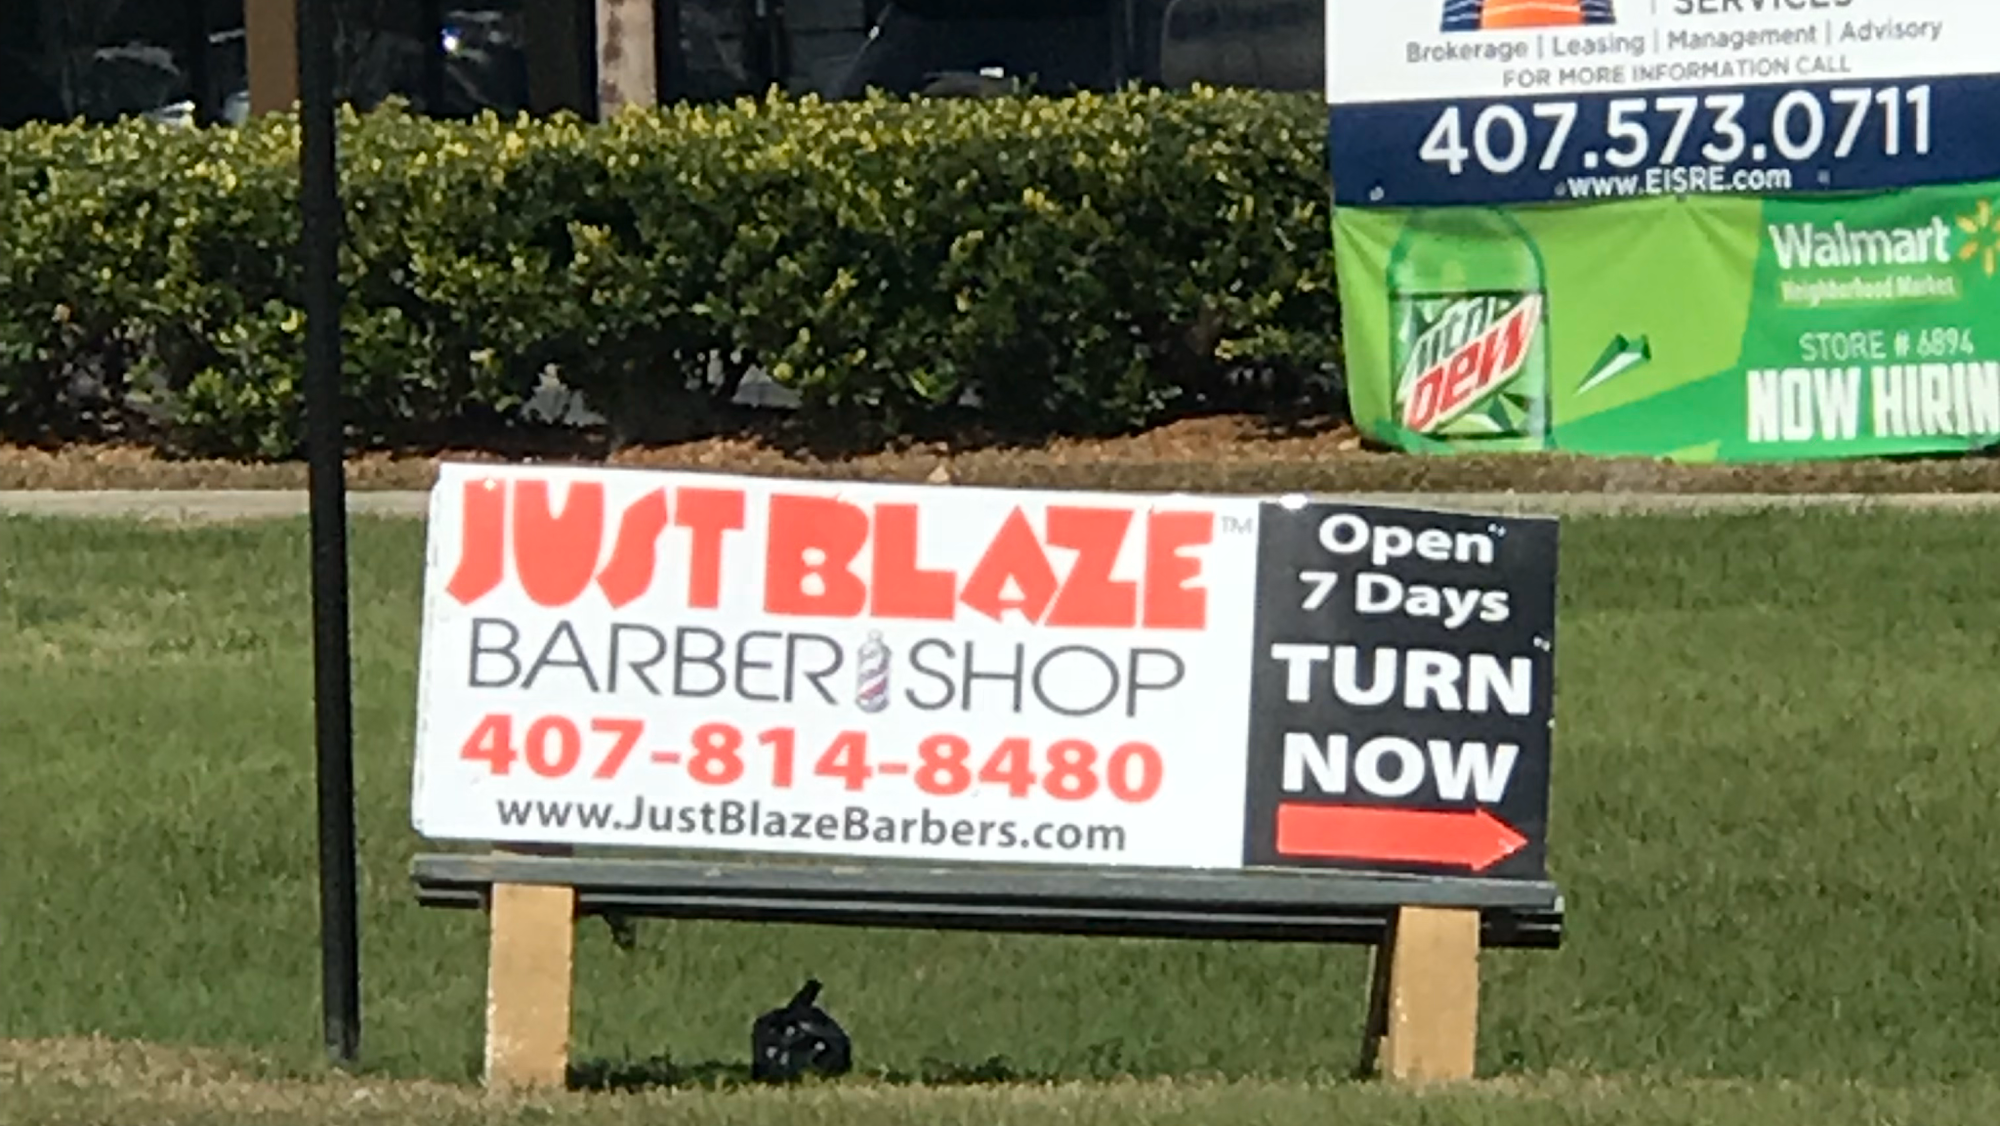 Just Blaze Barber Shop Inc